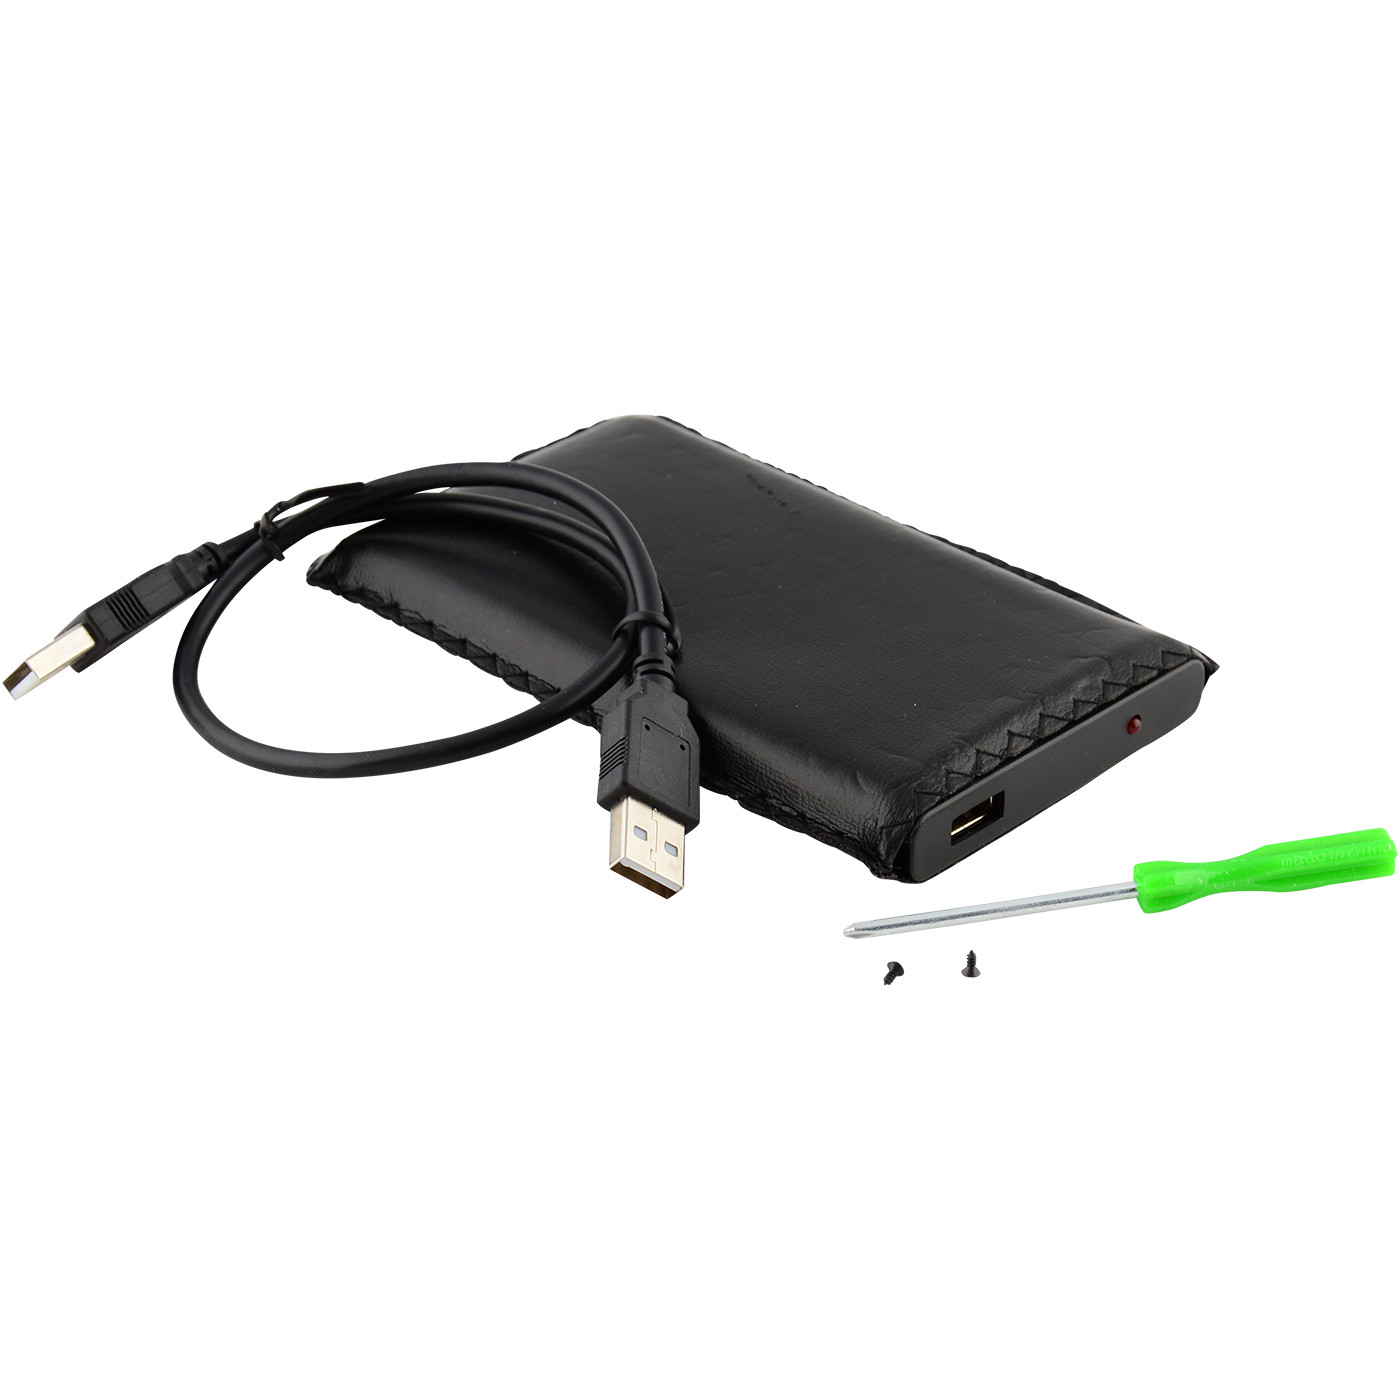 USB External Portable ATA IDE 2.5 Hard Drive Enclosure Case  